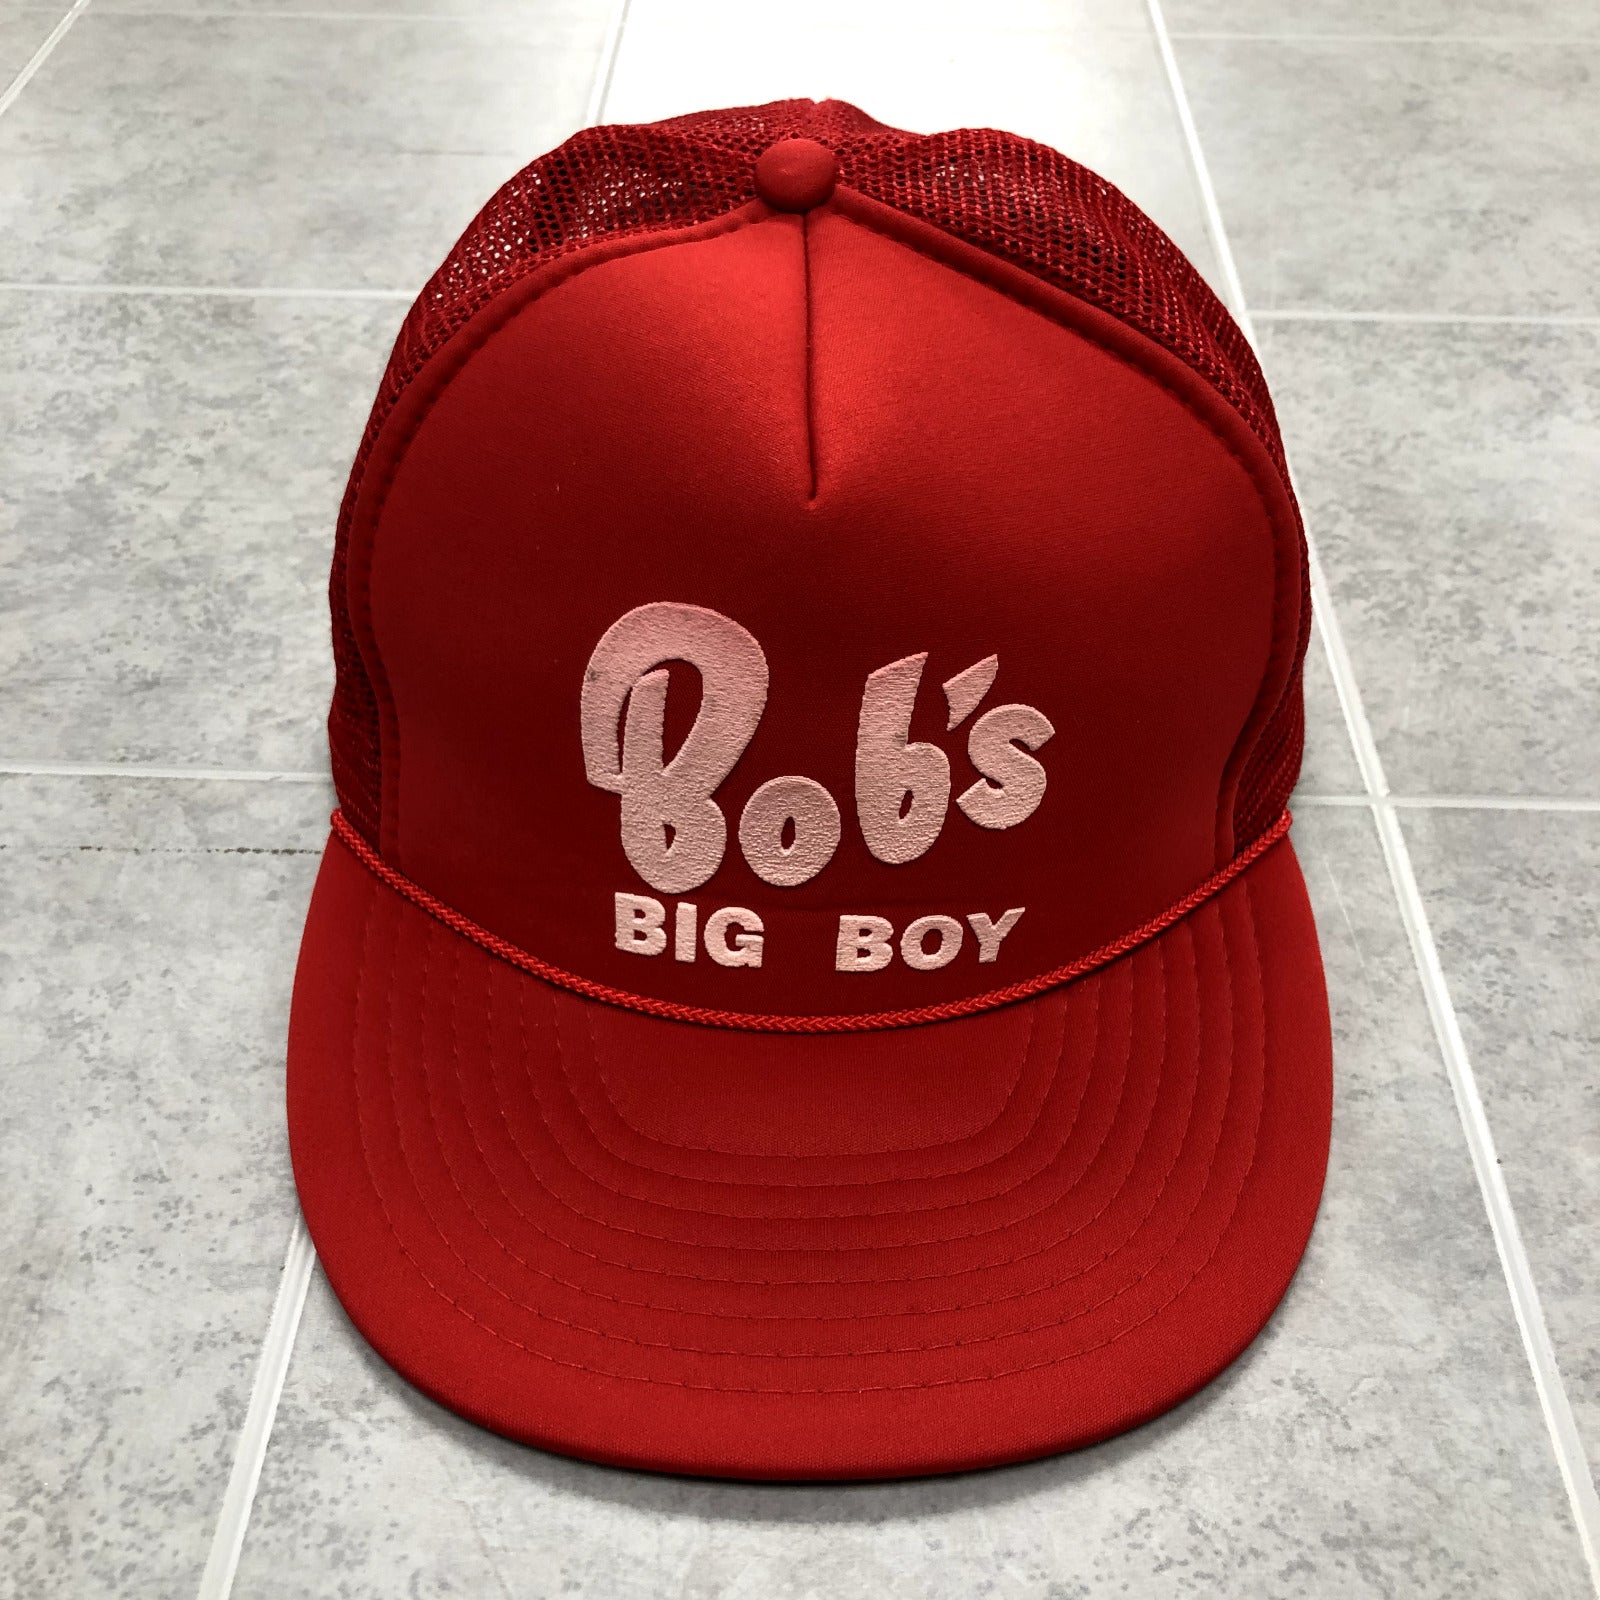 Vintage Nissin Red Mesh Snap Back Graphic Bob Big Boy Trucker Hat Adult One Size